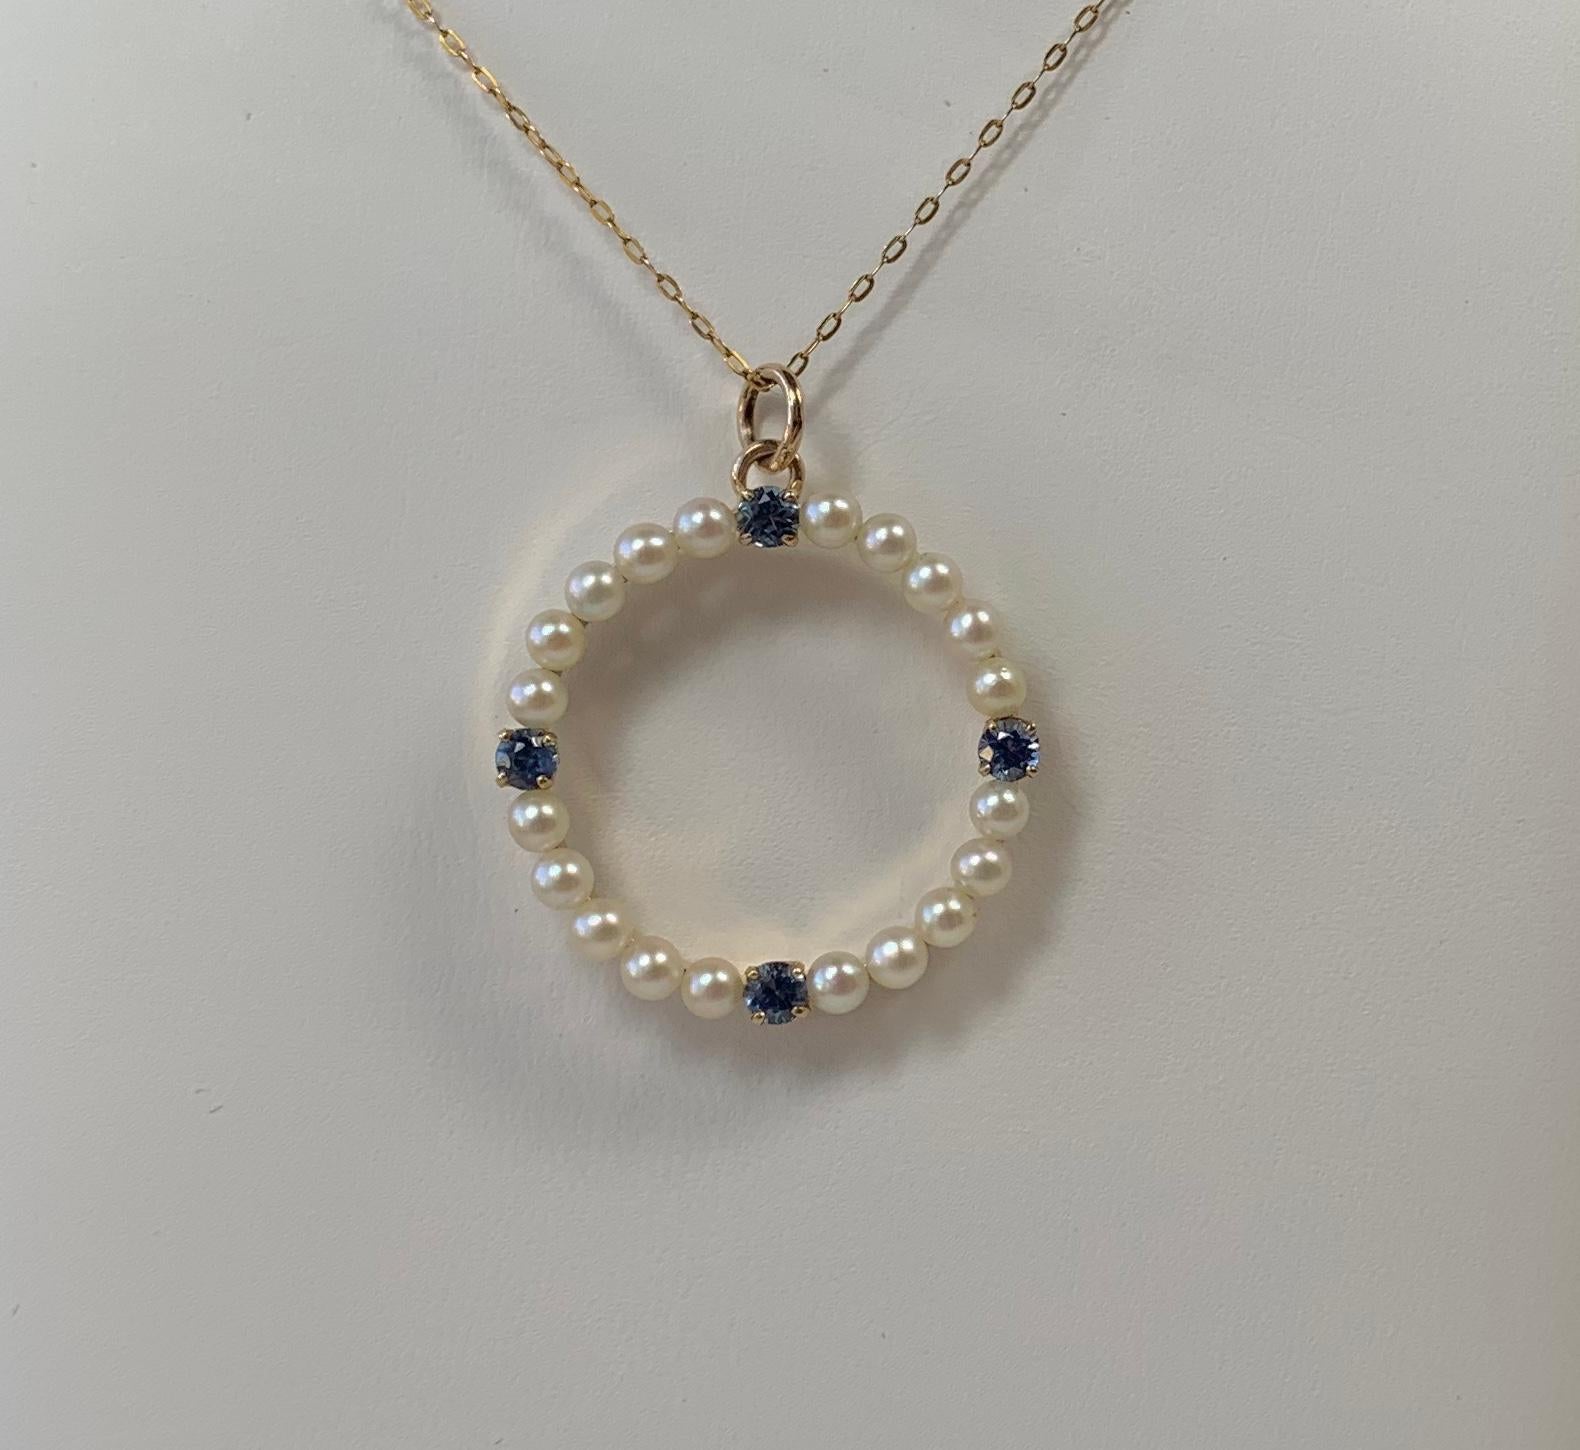 Gem Quality Natural Sapphire Art Deco Pearl Circle Pendant Antique Necklace Gold For Sale 2